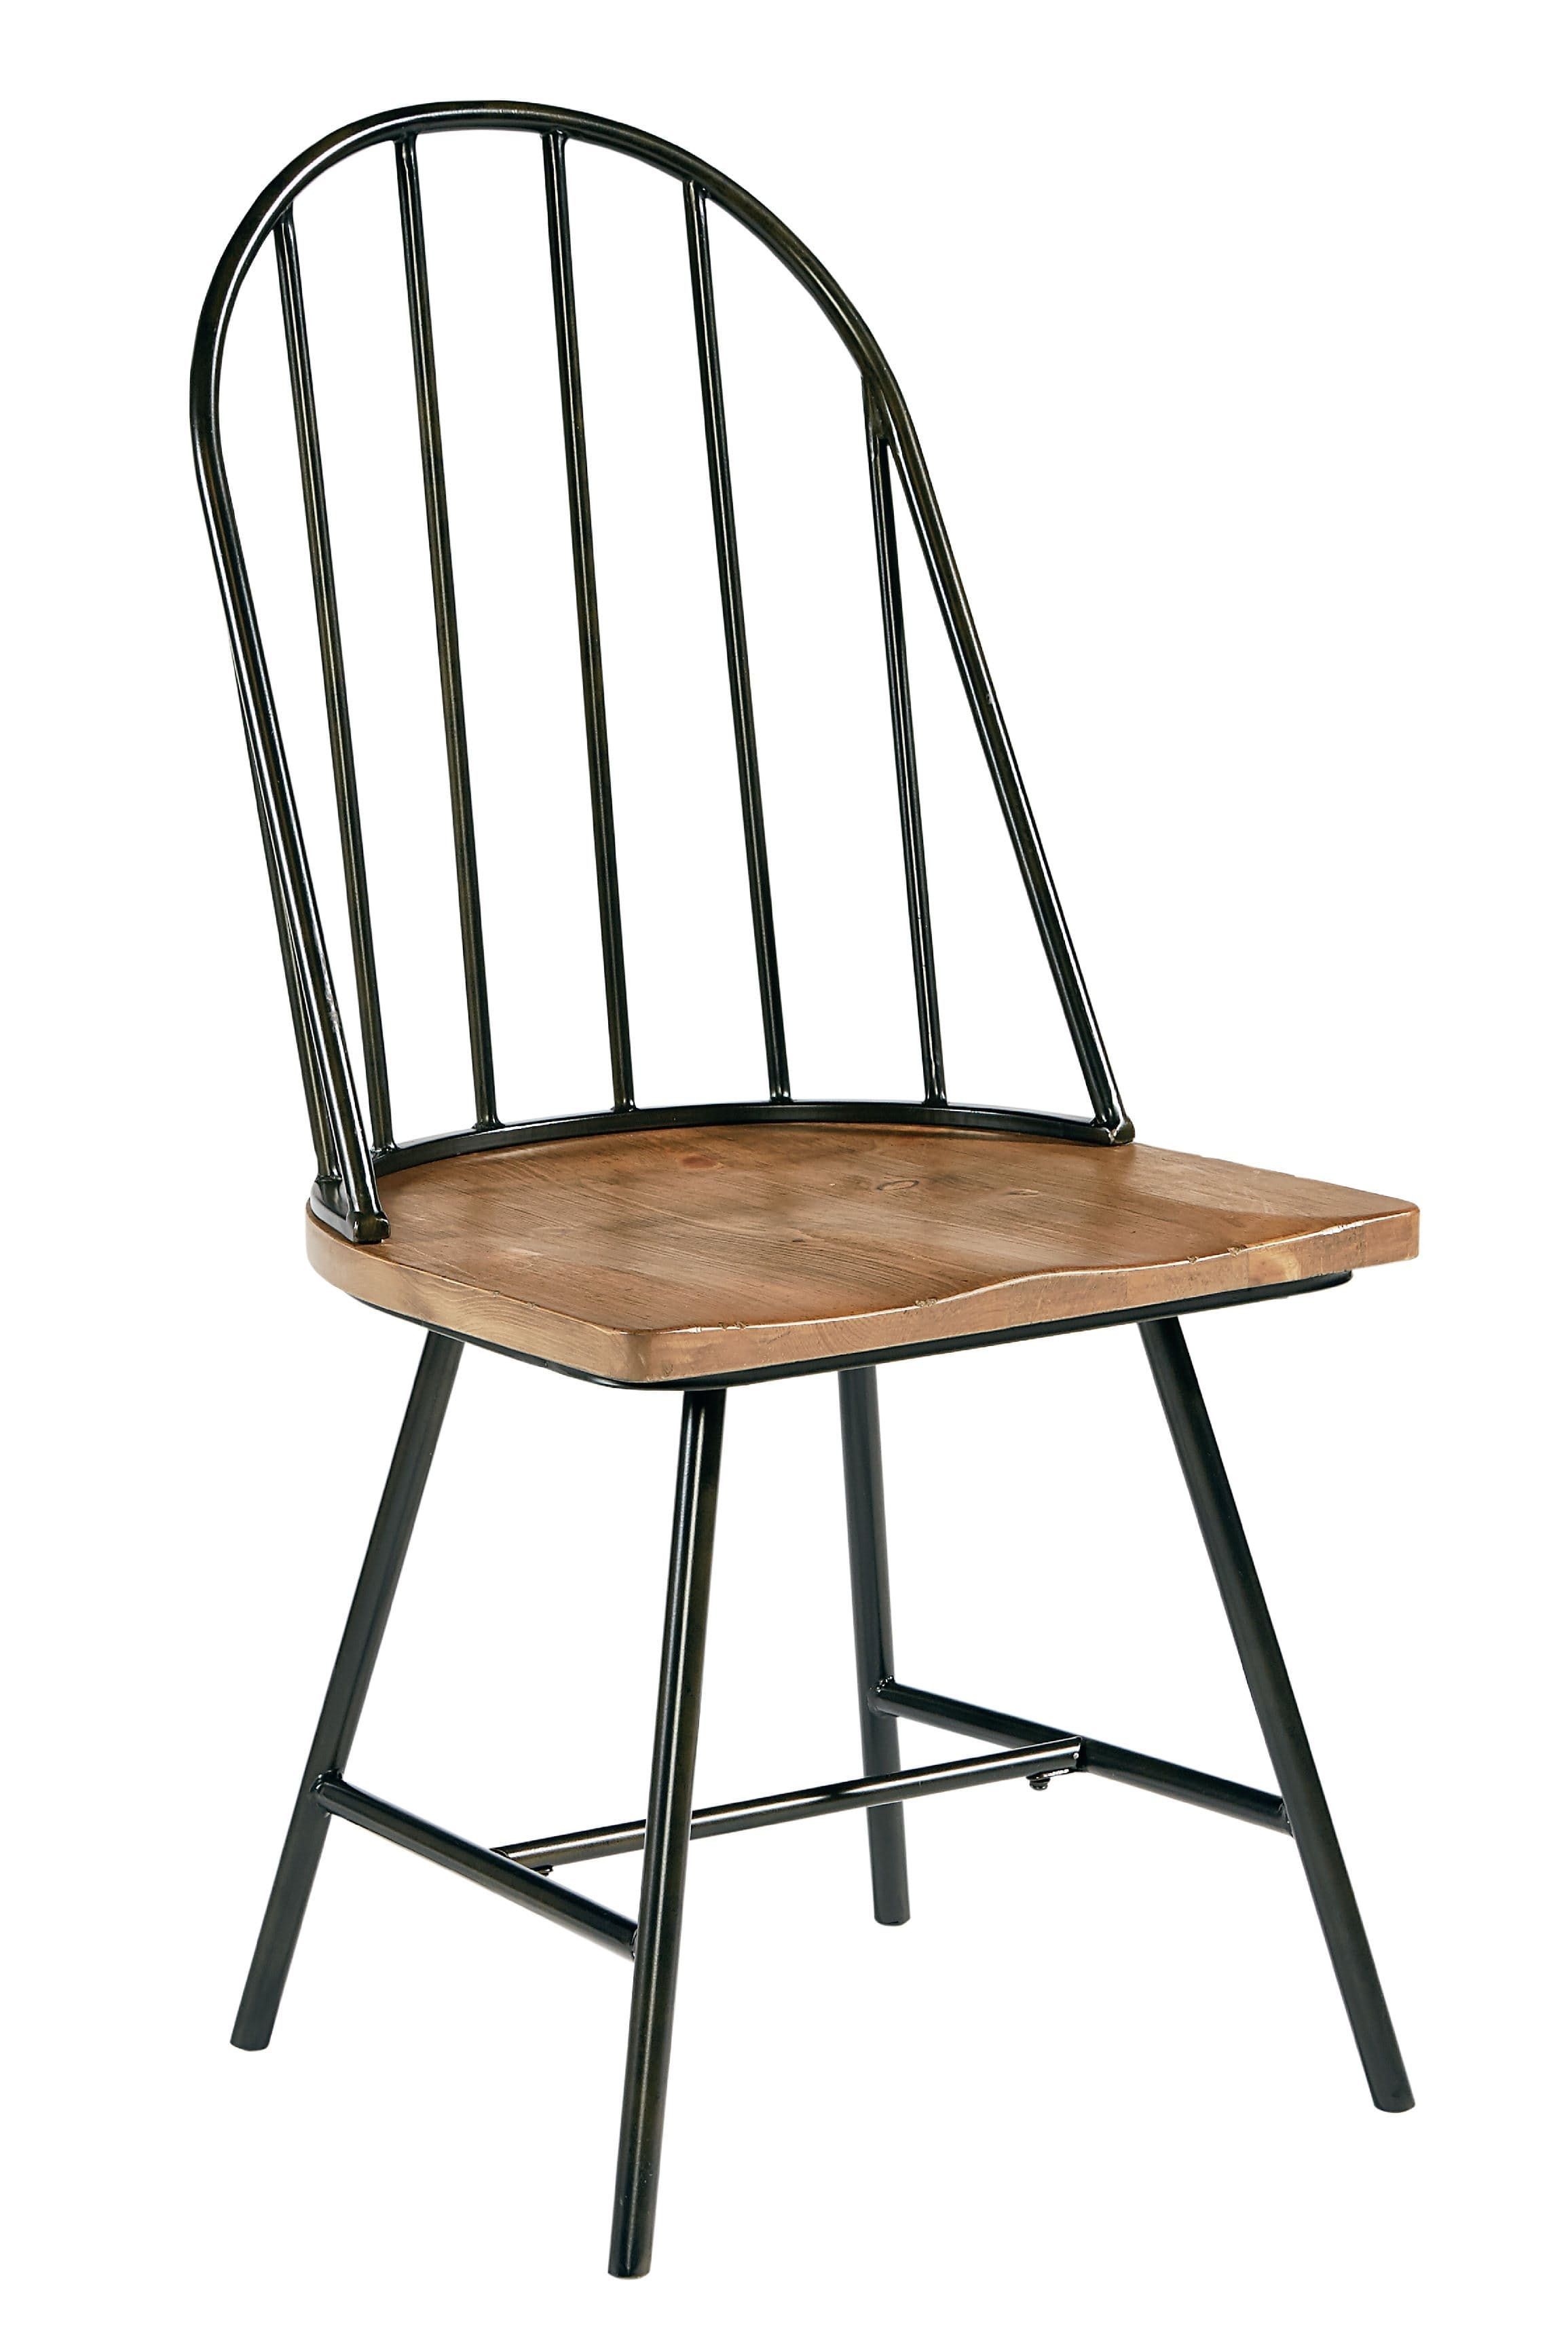 Magnolia Home – Windsor Metal And Wood Hoop Chair St:461600 (Photo 5 of 20)